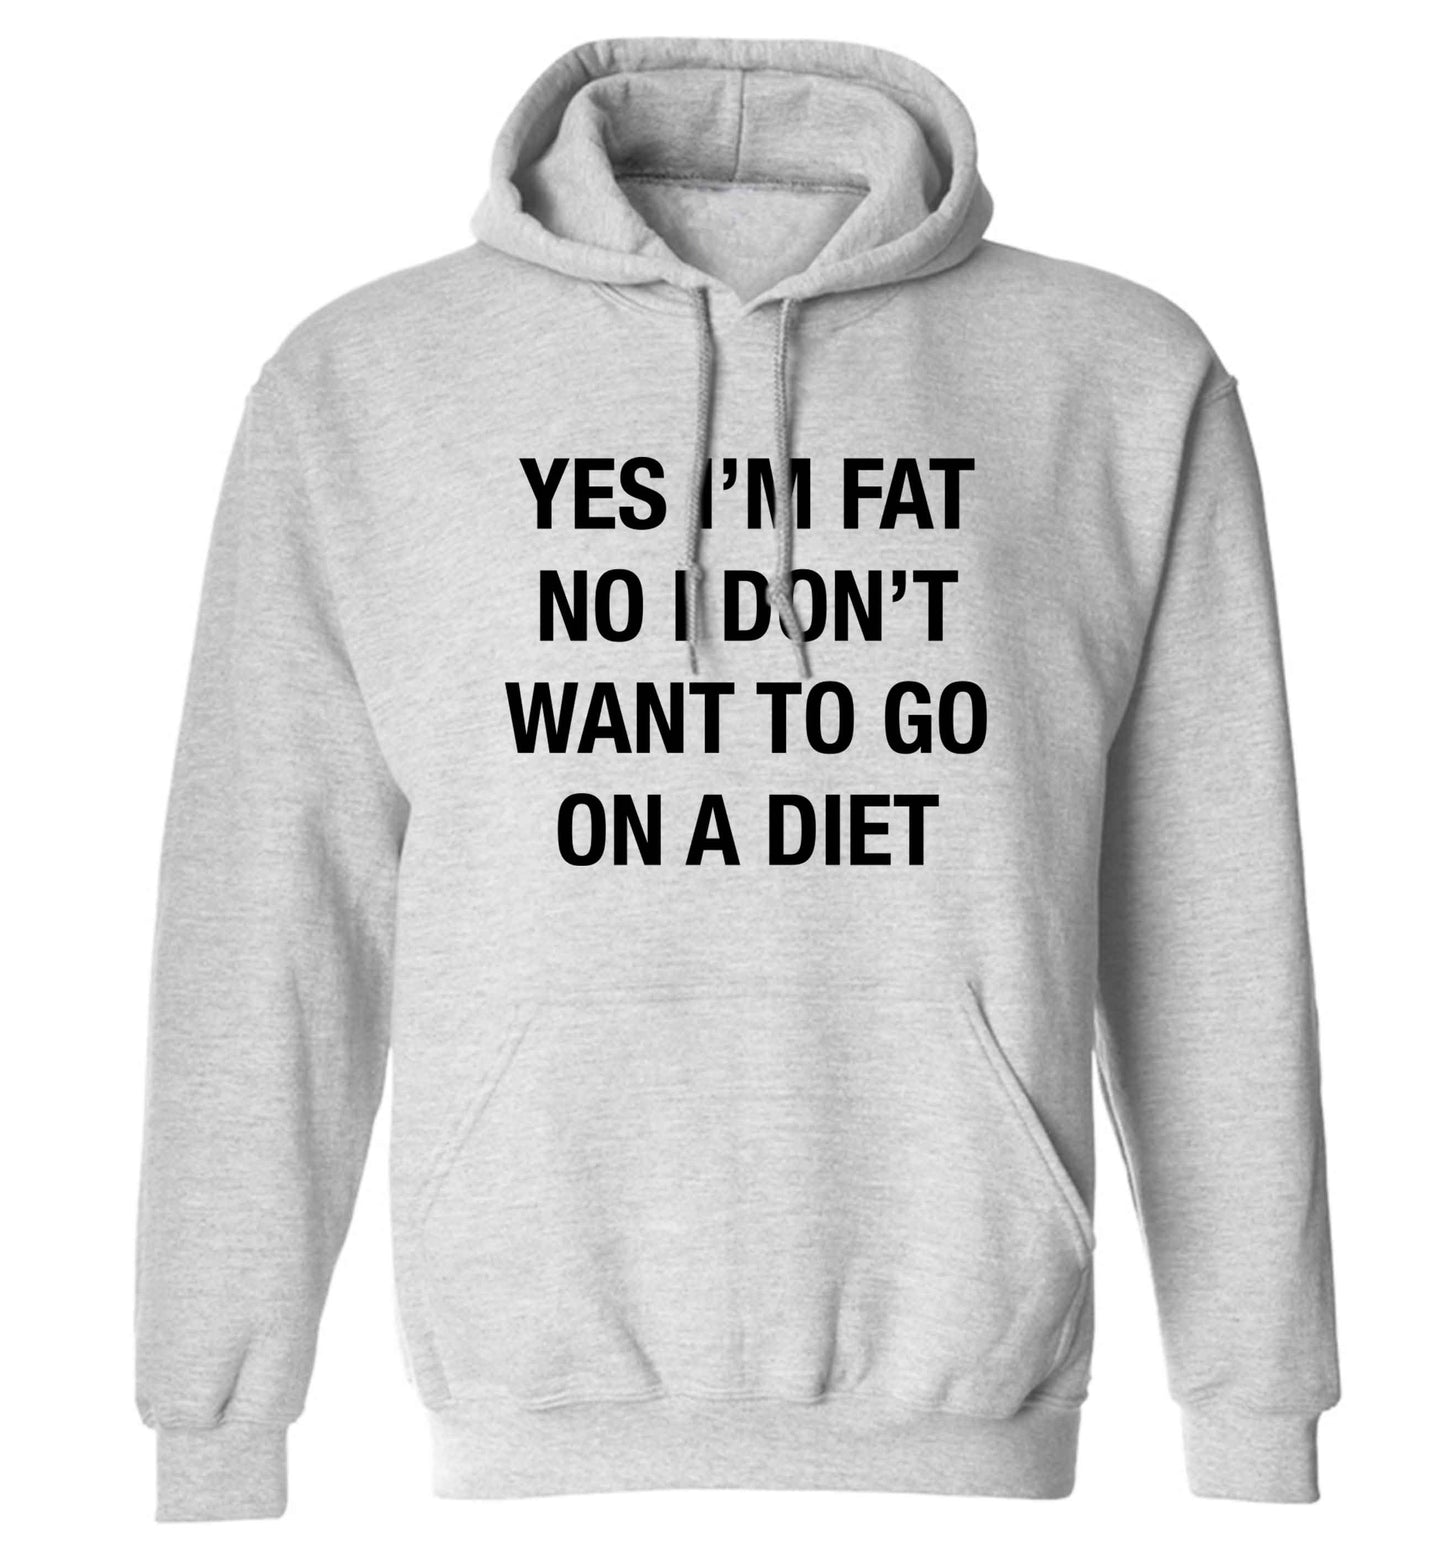 Yes I'm fat, no I don't want to go on a diet adults unisex grey hoodie 2XL